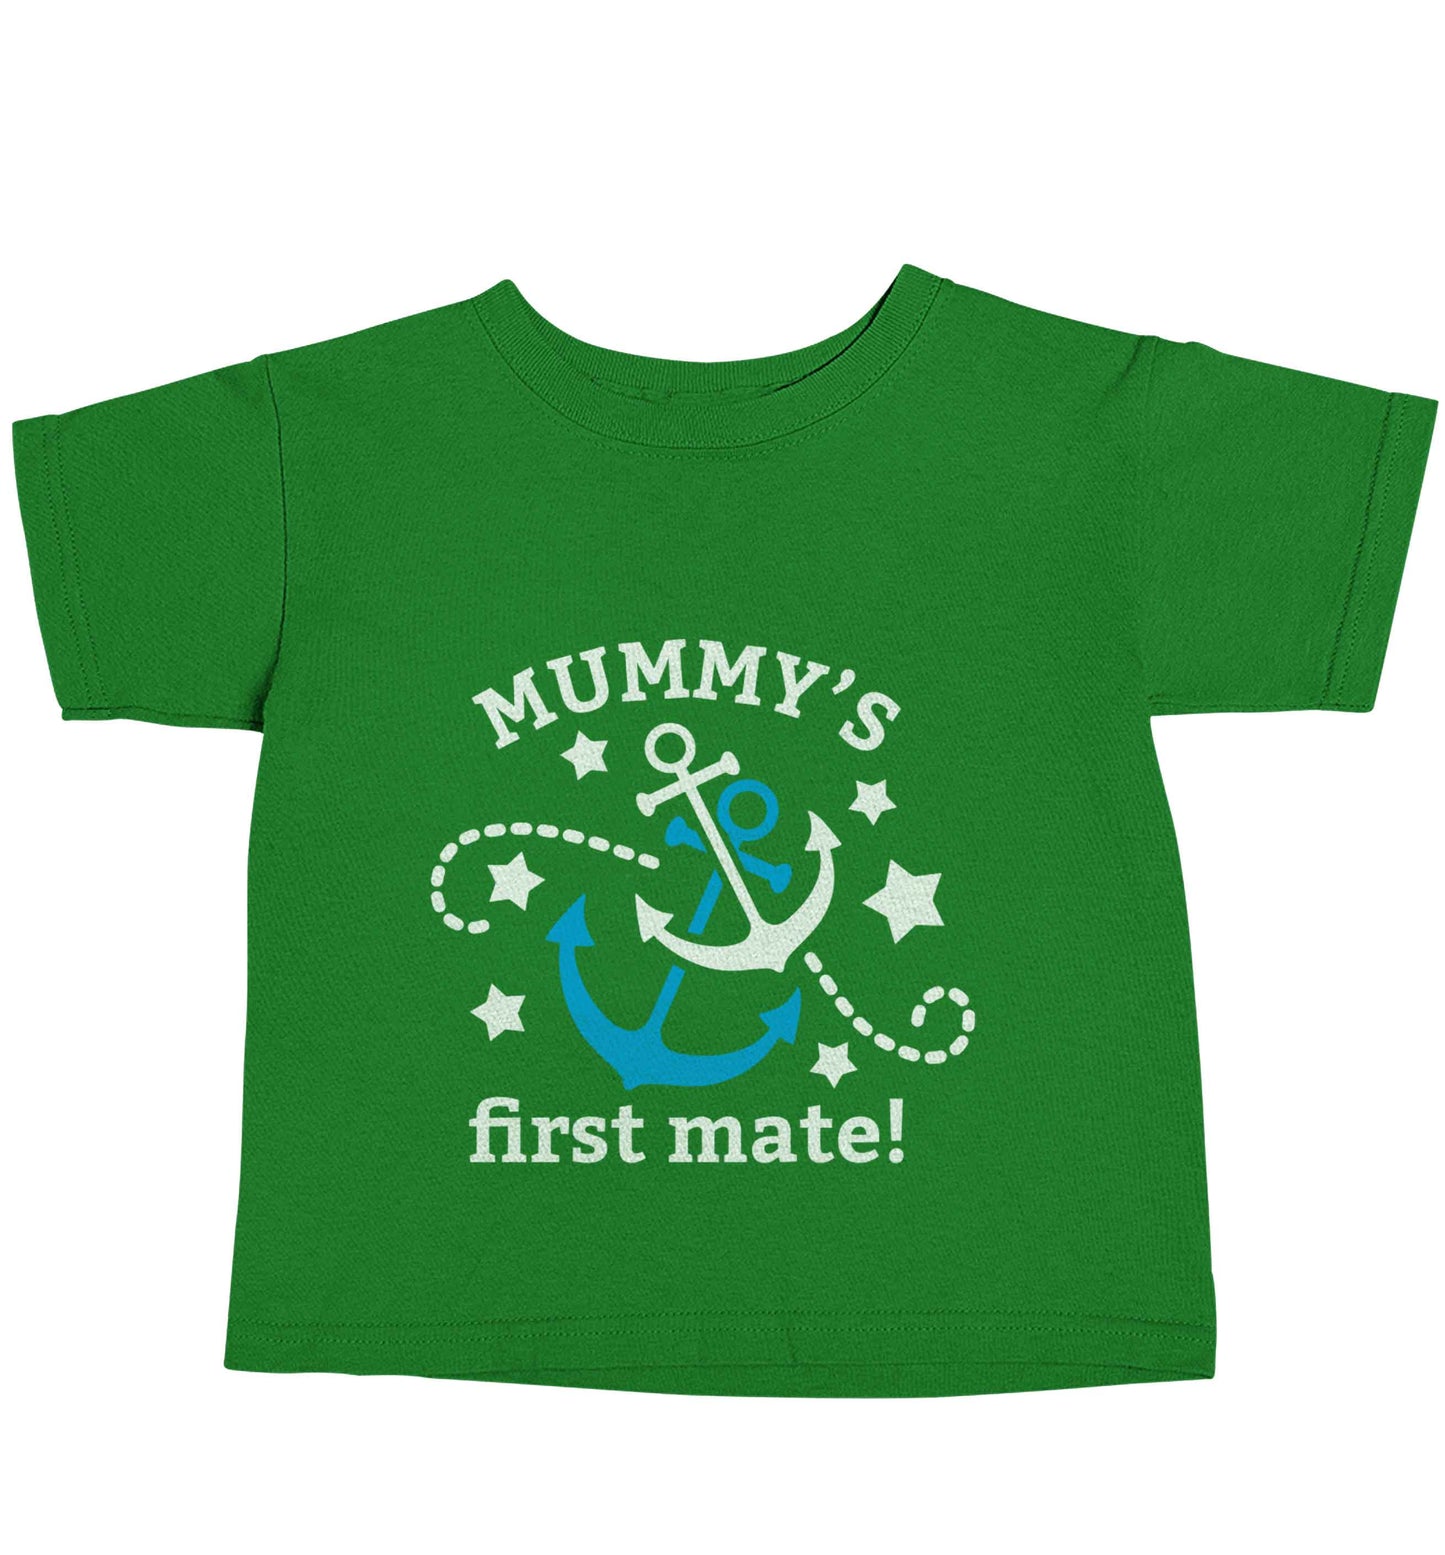 Mummy's First Mate green baby toddler Tshirt 2 Years